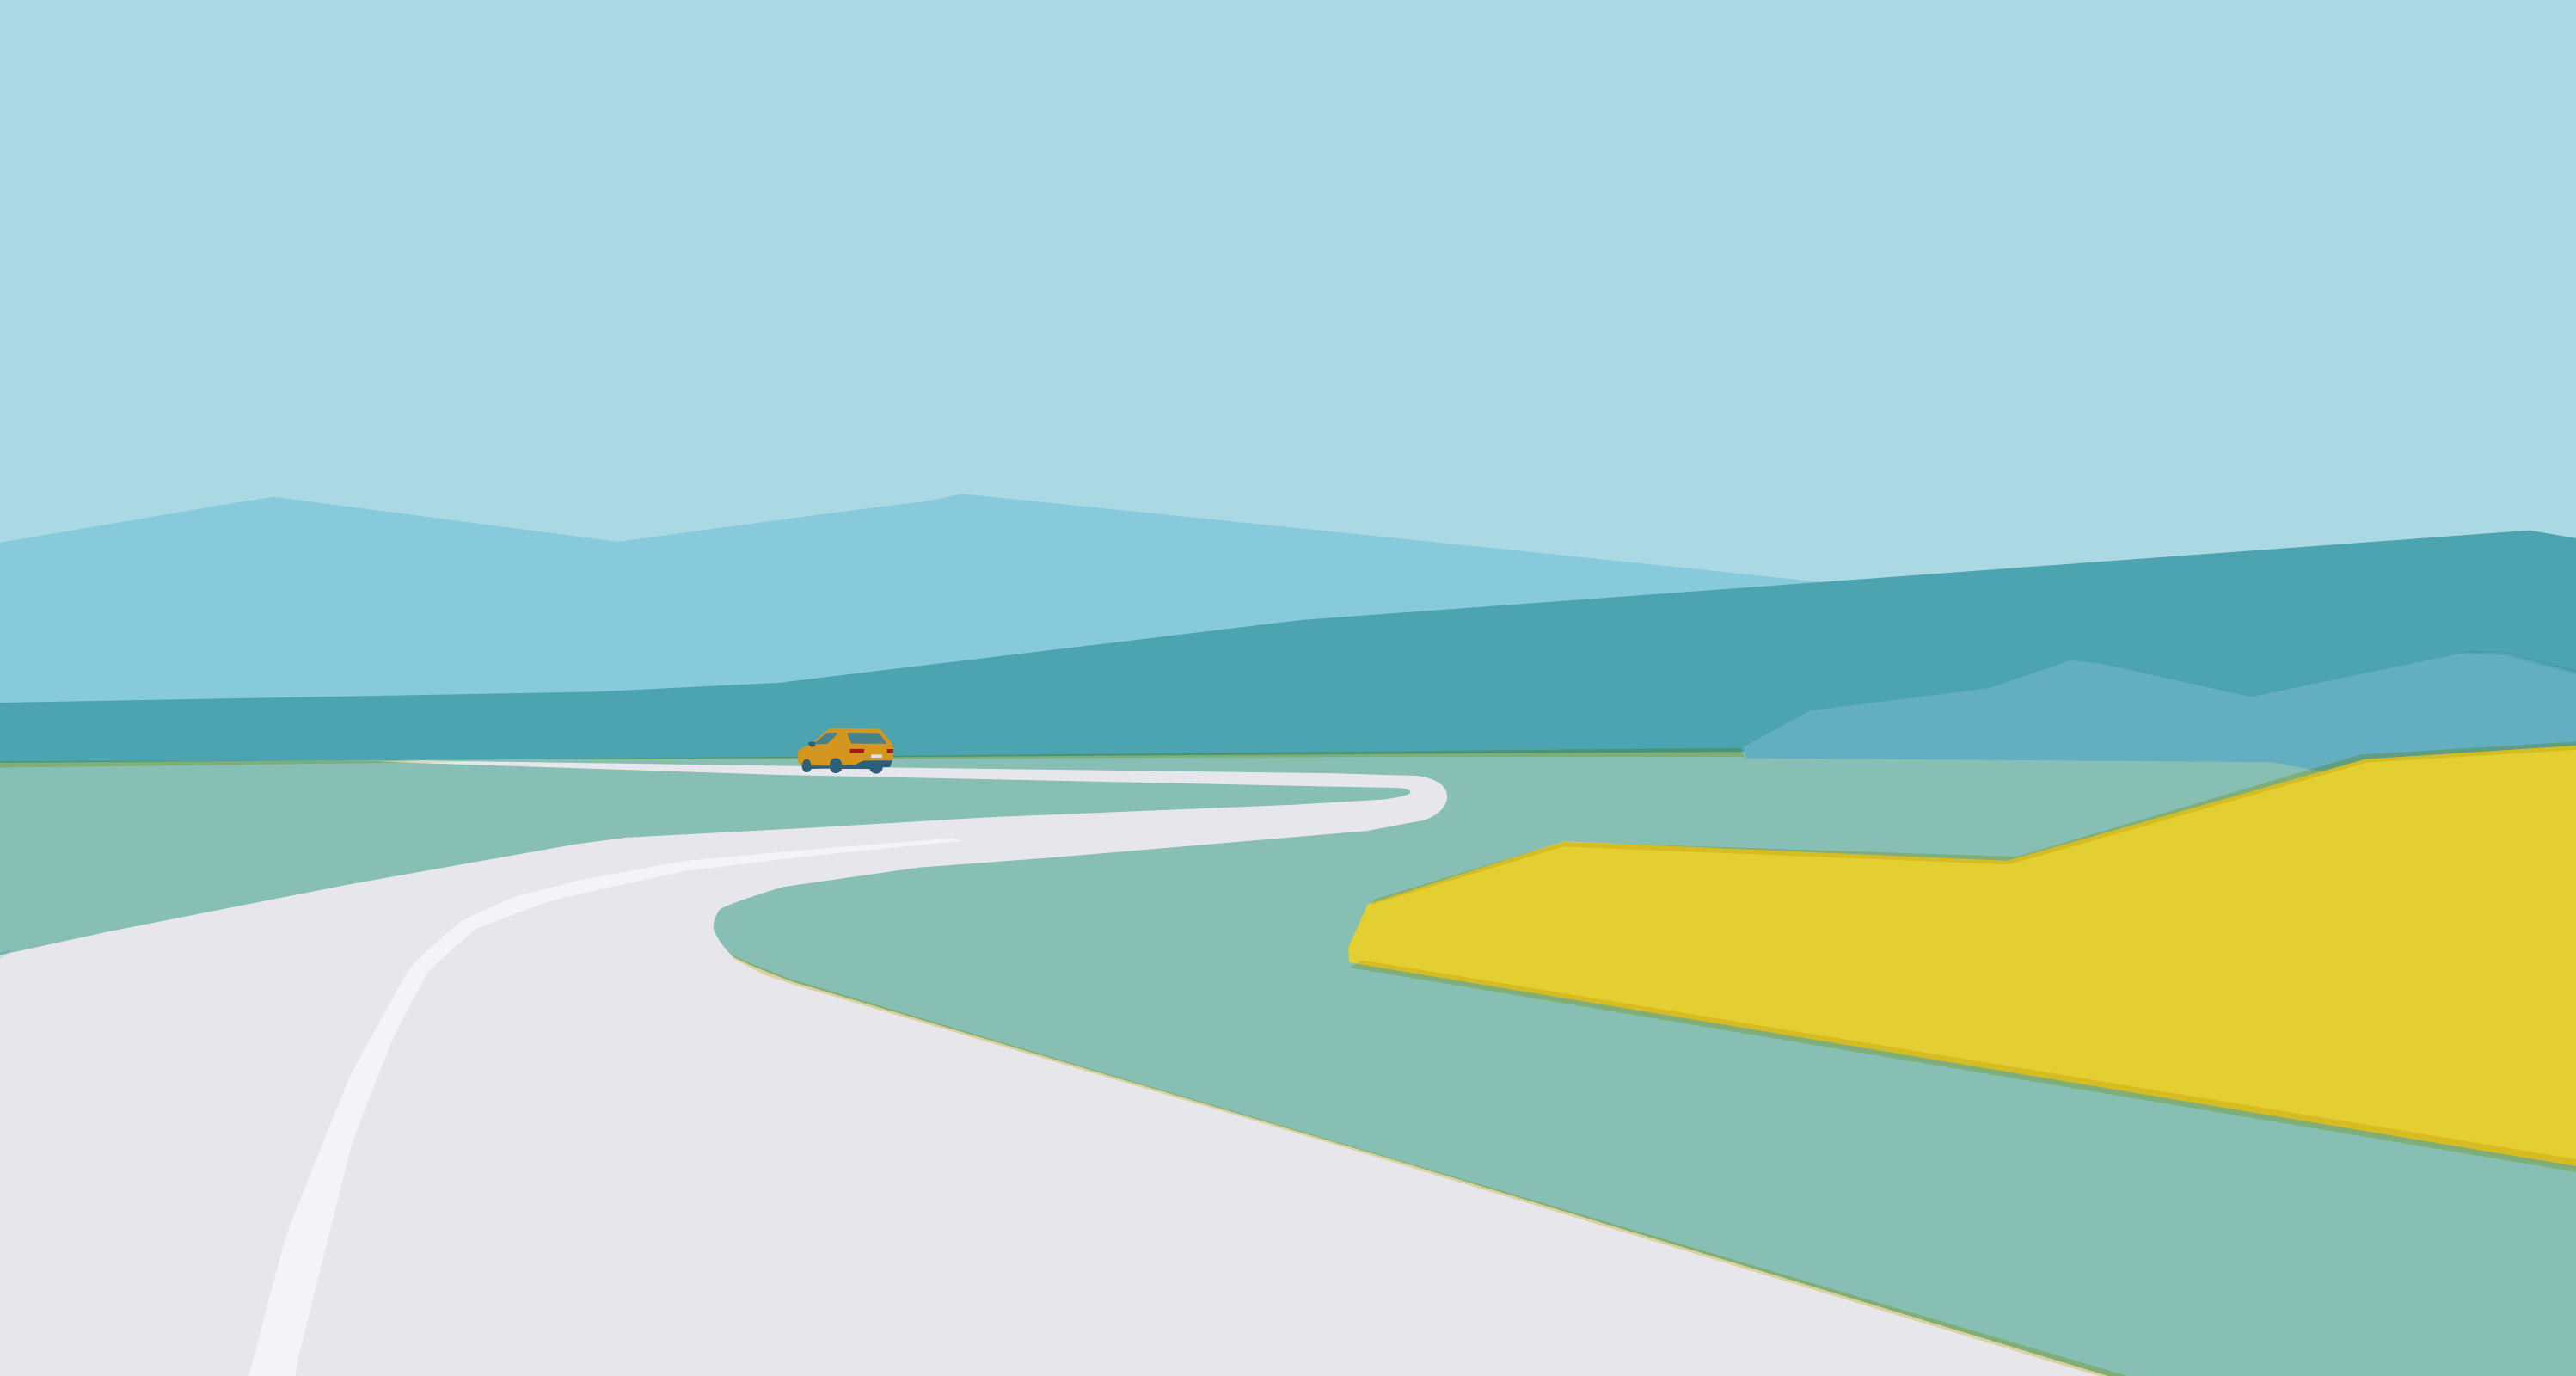 Pintura de una larga carretera con un coche SEAT al final de ella